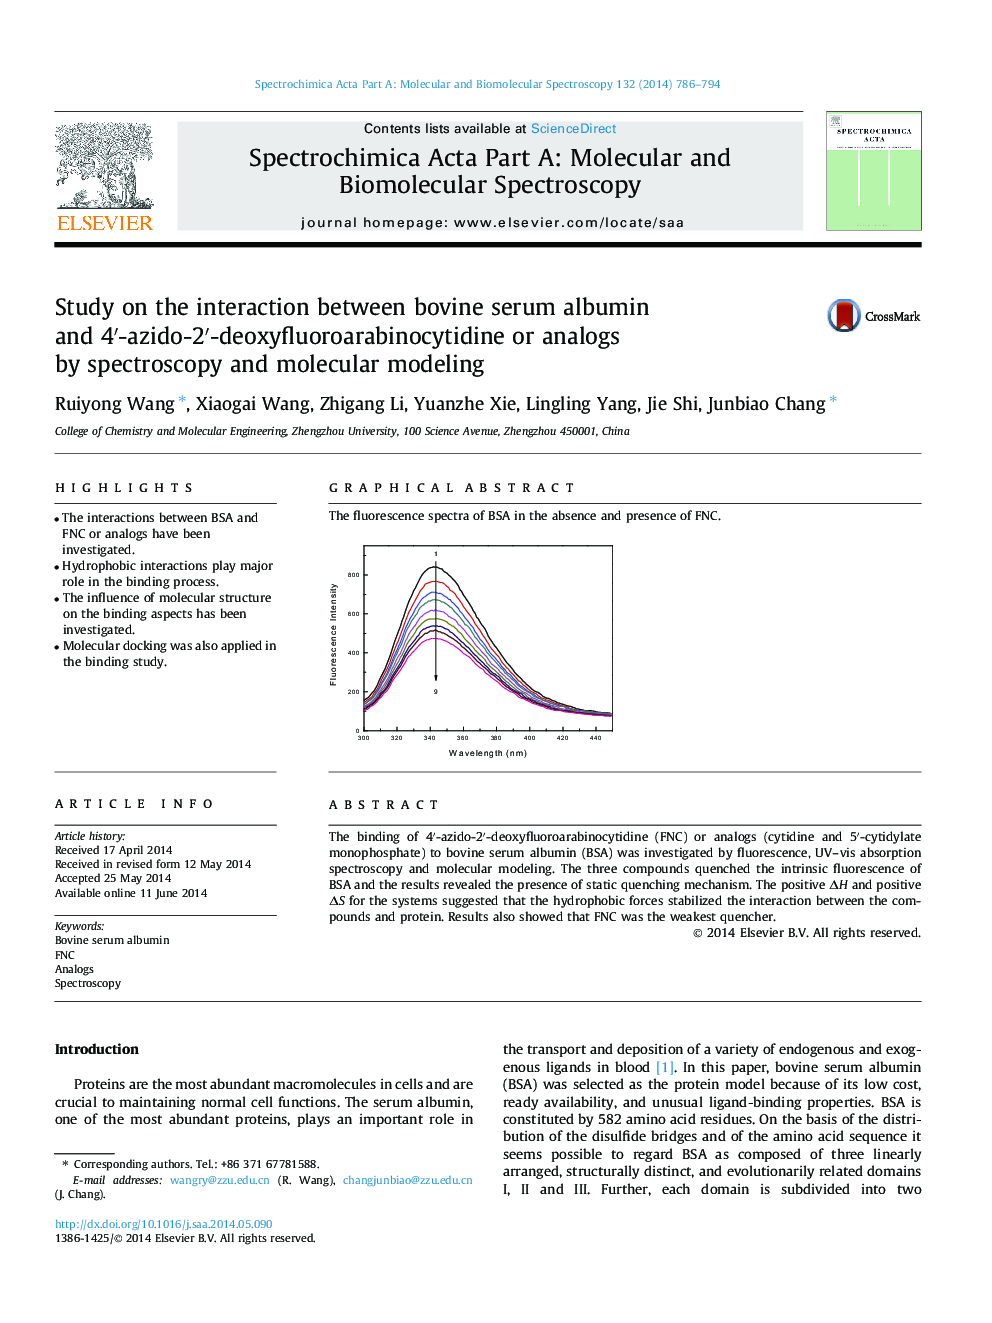 Study on the interaction between bovine serum albumin and 4′-azido-2′-deoxyfluoroarabinocytidine or analogs by spectroscopy and molecular modeling